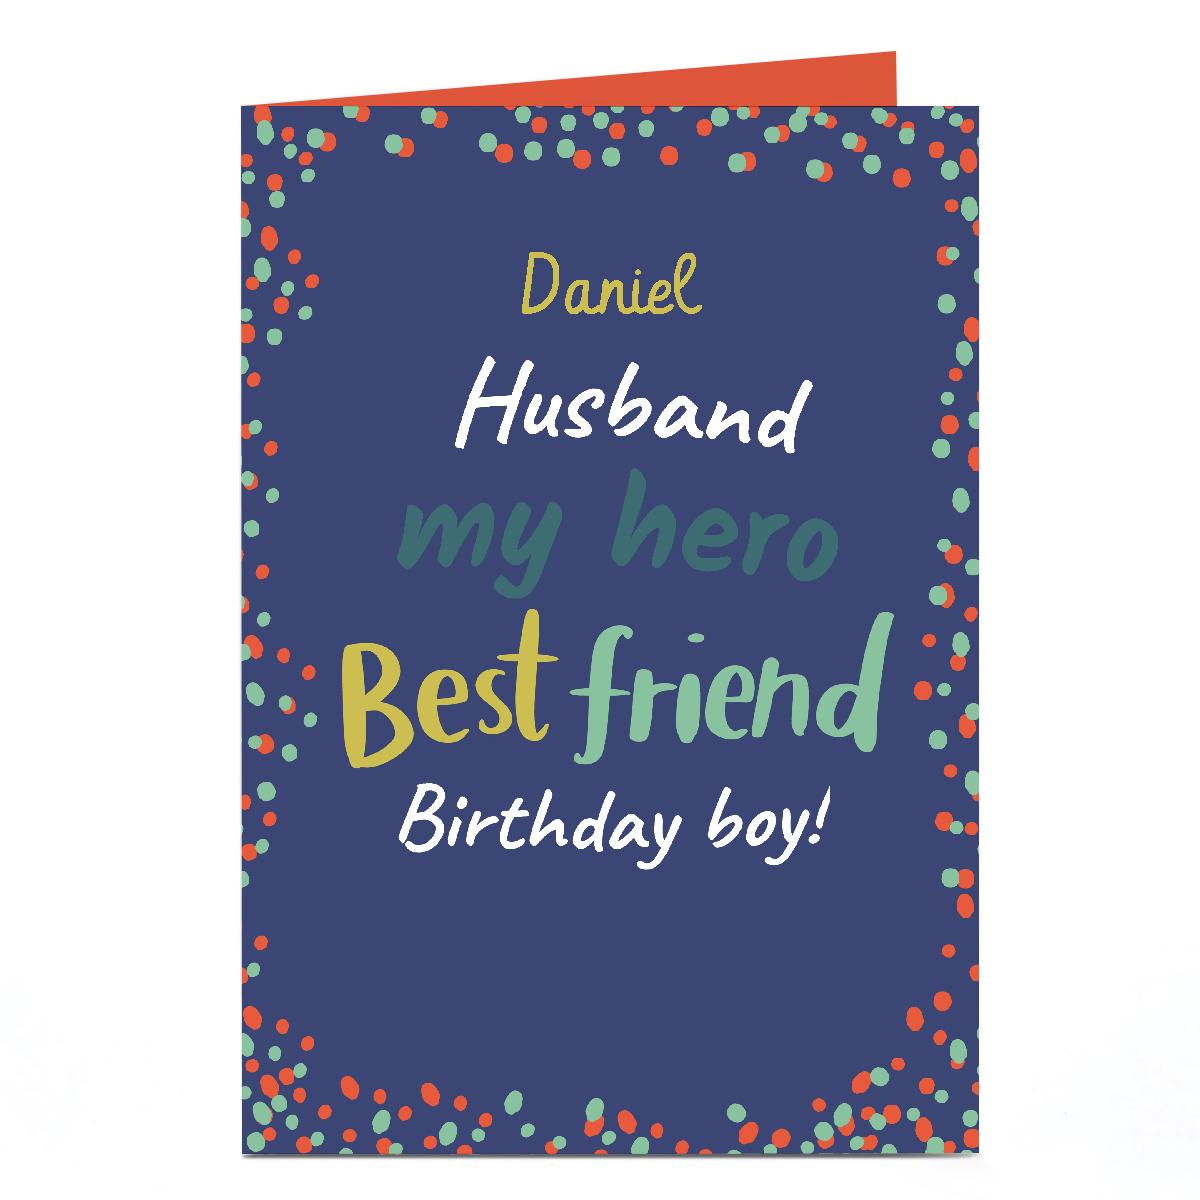 Personalised Birthday Card - Best Friend, Hero, Birthday Boy